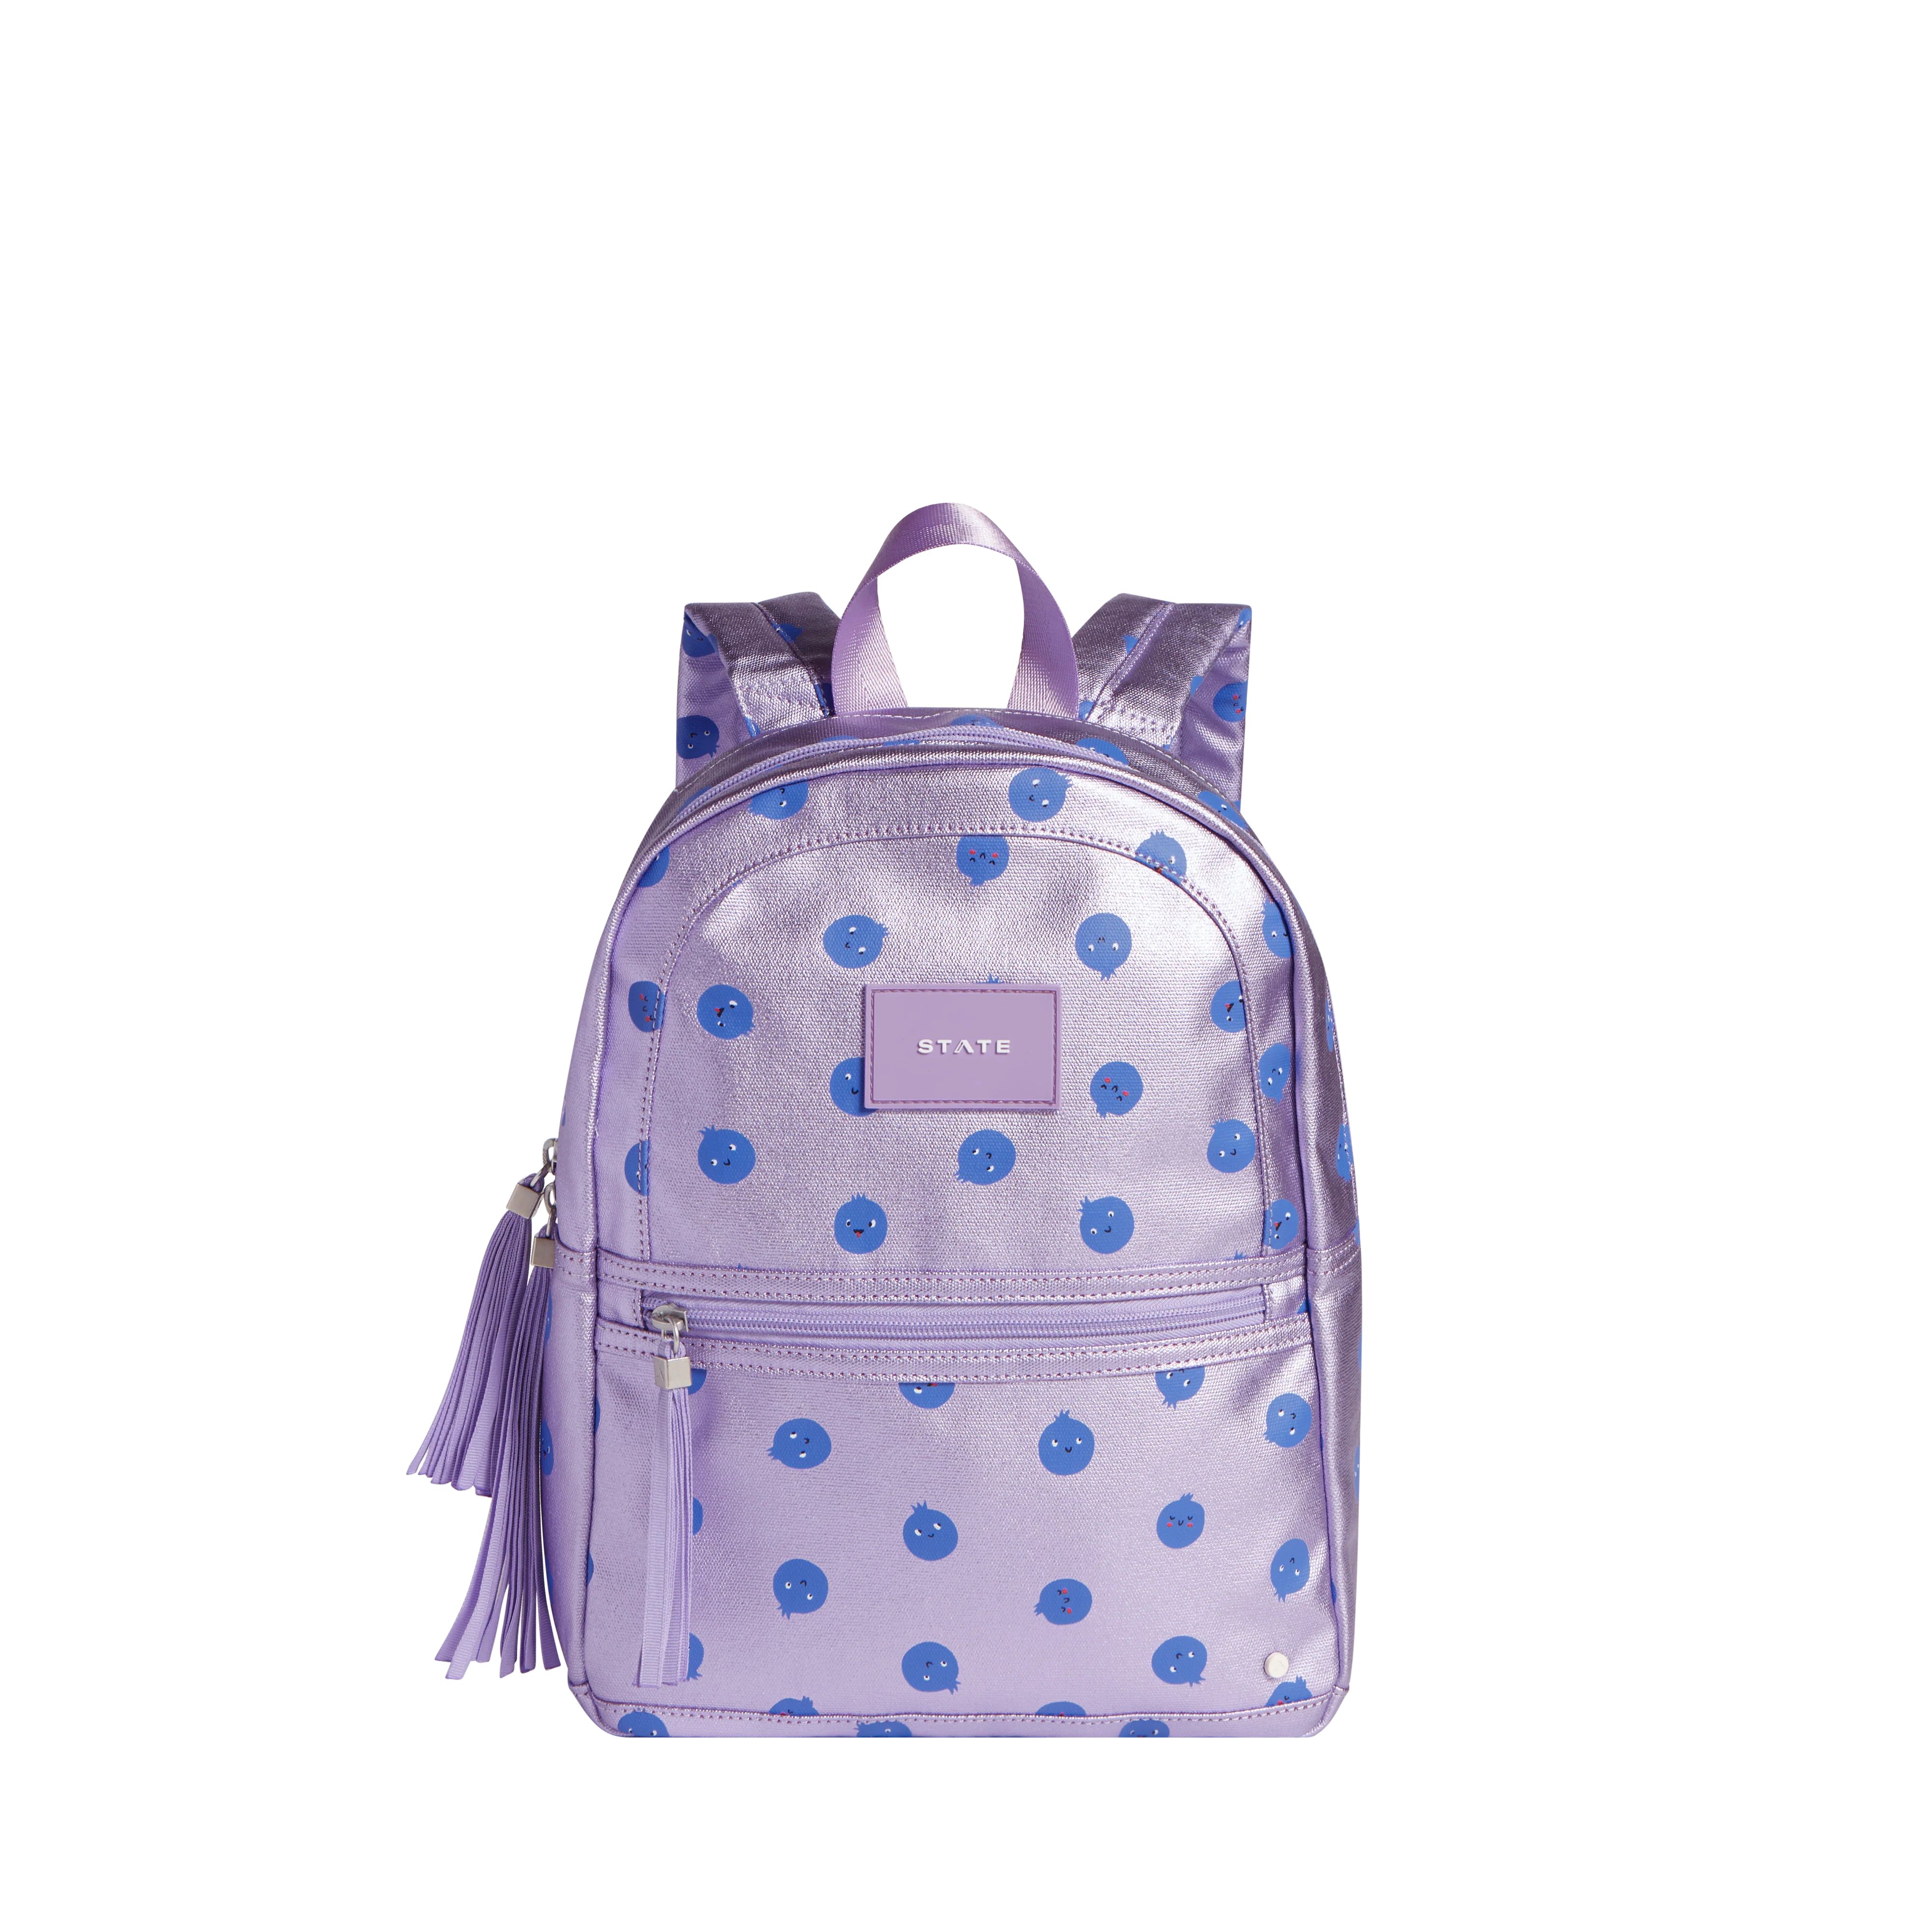 STATE Bags | Kane Kids Mini Backpack Metallic Blueberries | STATE Bags